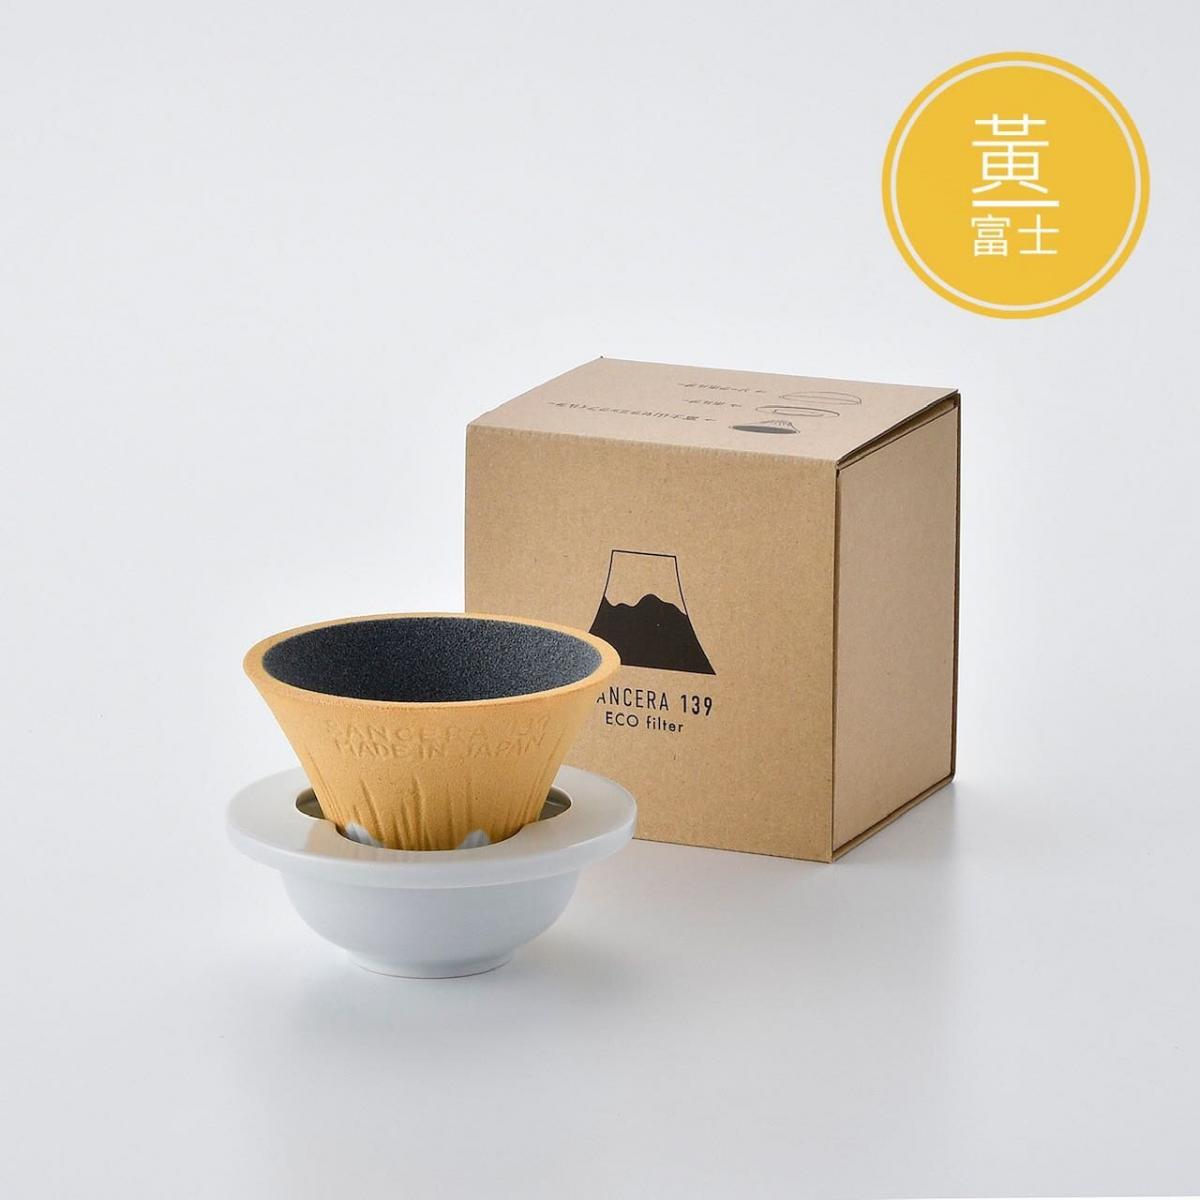 OTHER - SANCERA 139 COFIL fuji ceramic filter cup｜Coffee filter cup-Huang Fuji (yellow)